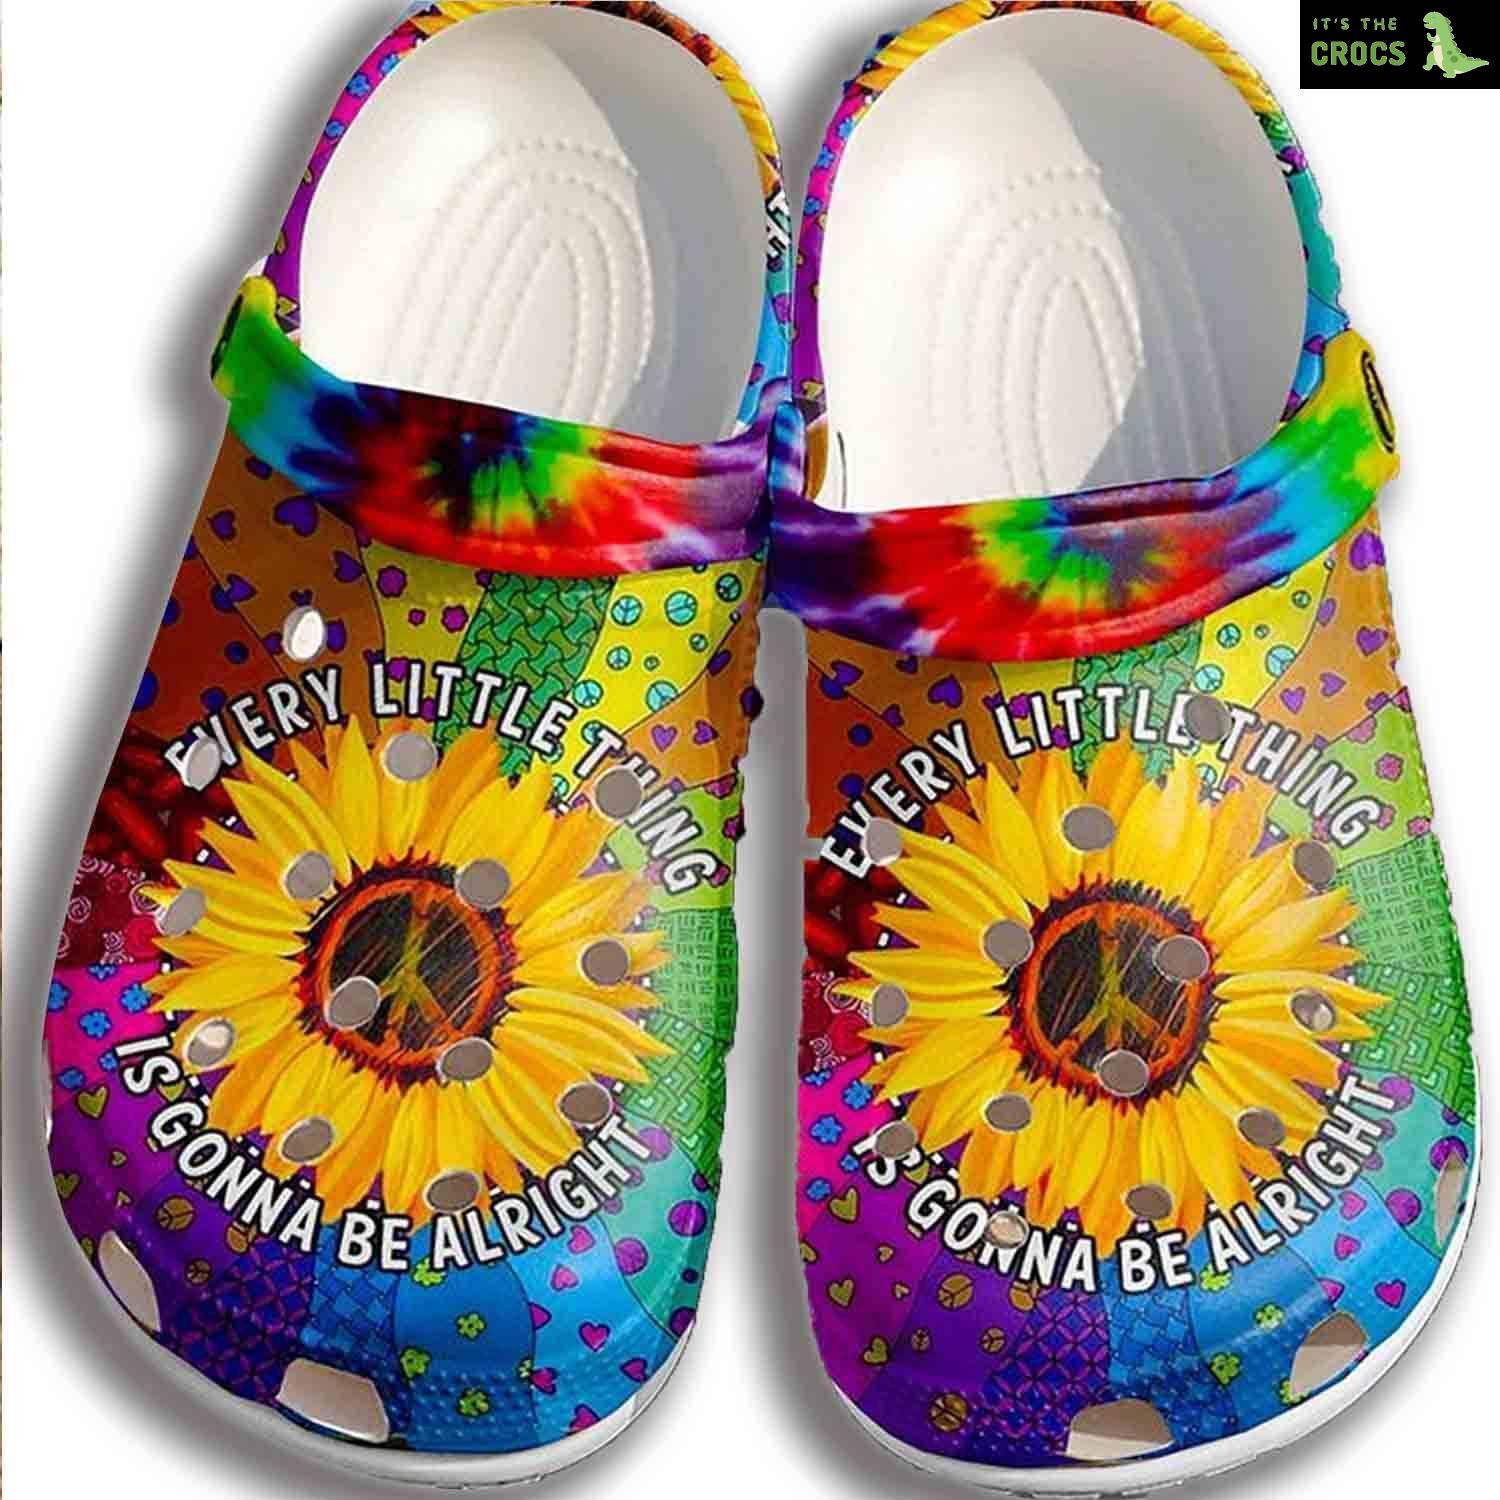 Hippie Gonna Be Alright Croc Crocs Shoes Men Women – Sunflower Crocs Shoes Crocbland Clog Gifts For Son Daughter